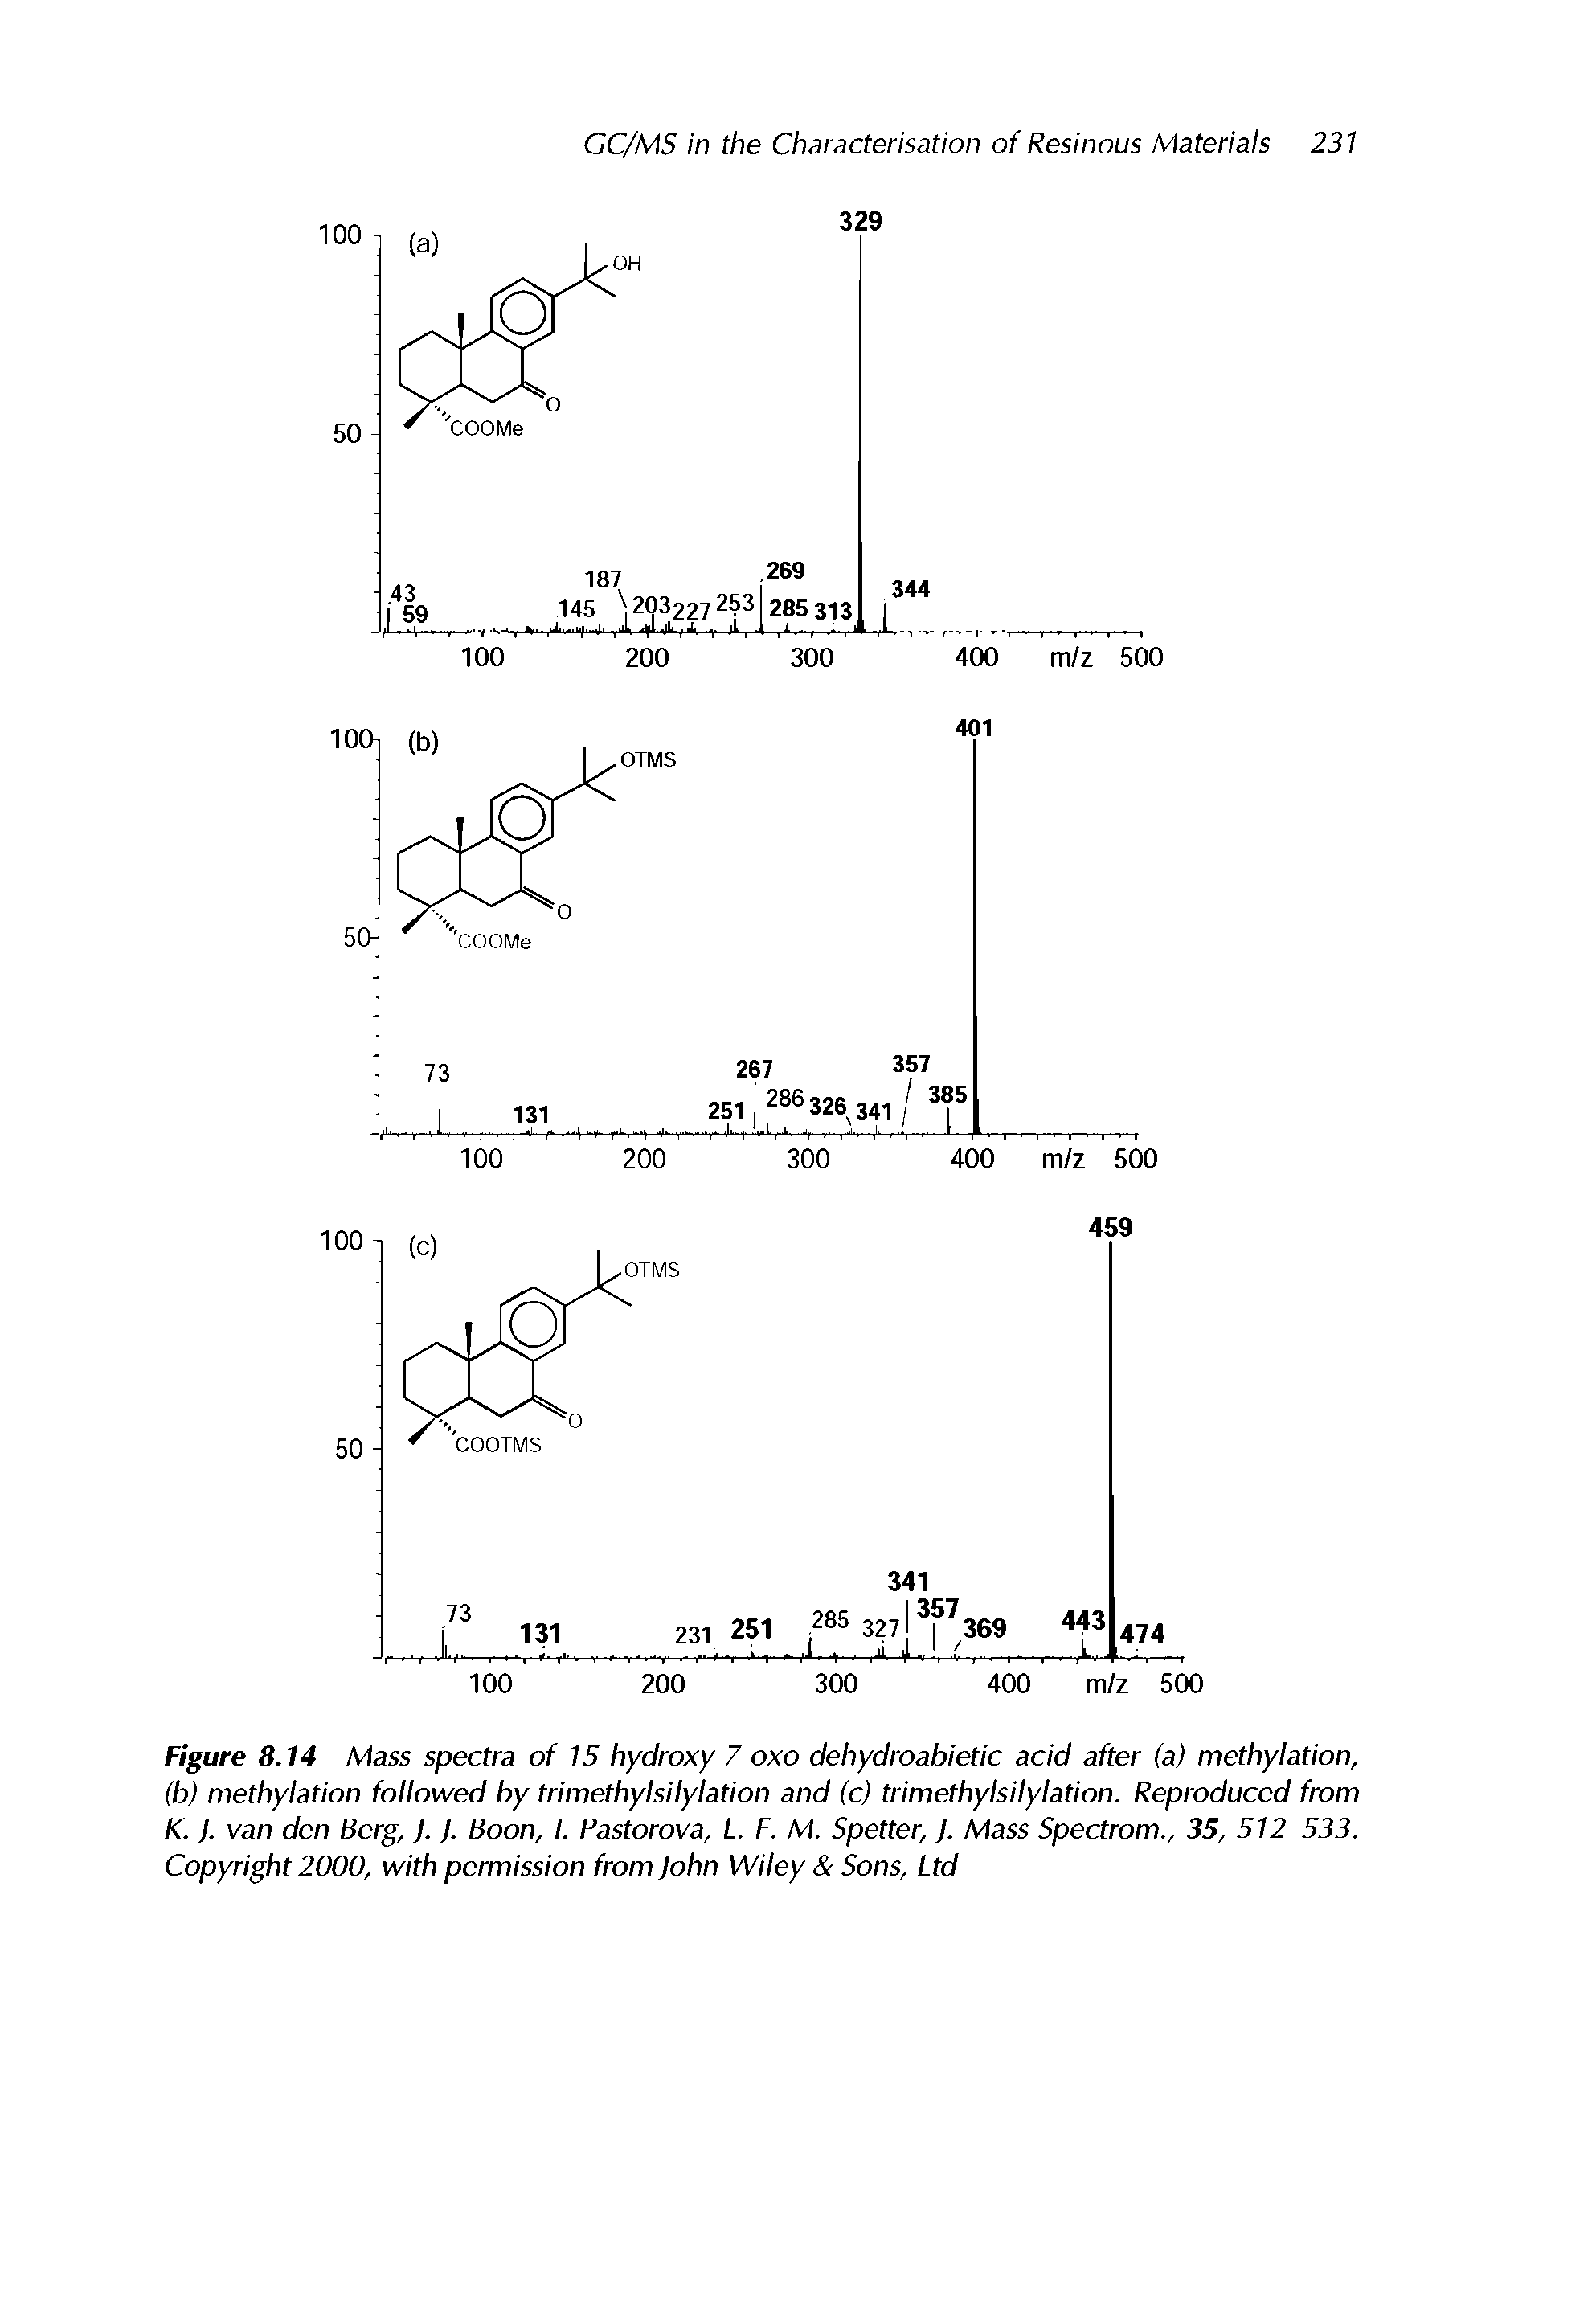 Figure 8.14 Mass spectra of 15 hydroxy 7 oxo dehydroabietic acid after (a) methylation, (b) methylation followed by trimcthylsilylation and (c) trimcthylsilylation. Reproduced from K. J. van den Berg, J. J. Boon, I. Pastorova, L. F. M. Spetter, J. Mass Spectrom., 35, 512 533. Copyright 2000, with permission from John Wiley Sons, Ltd...